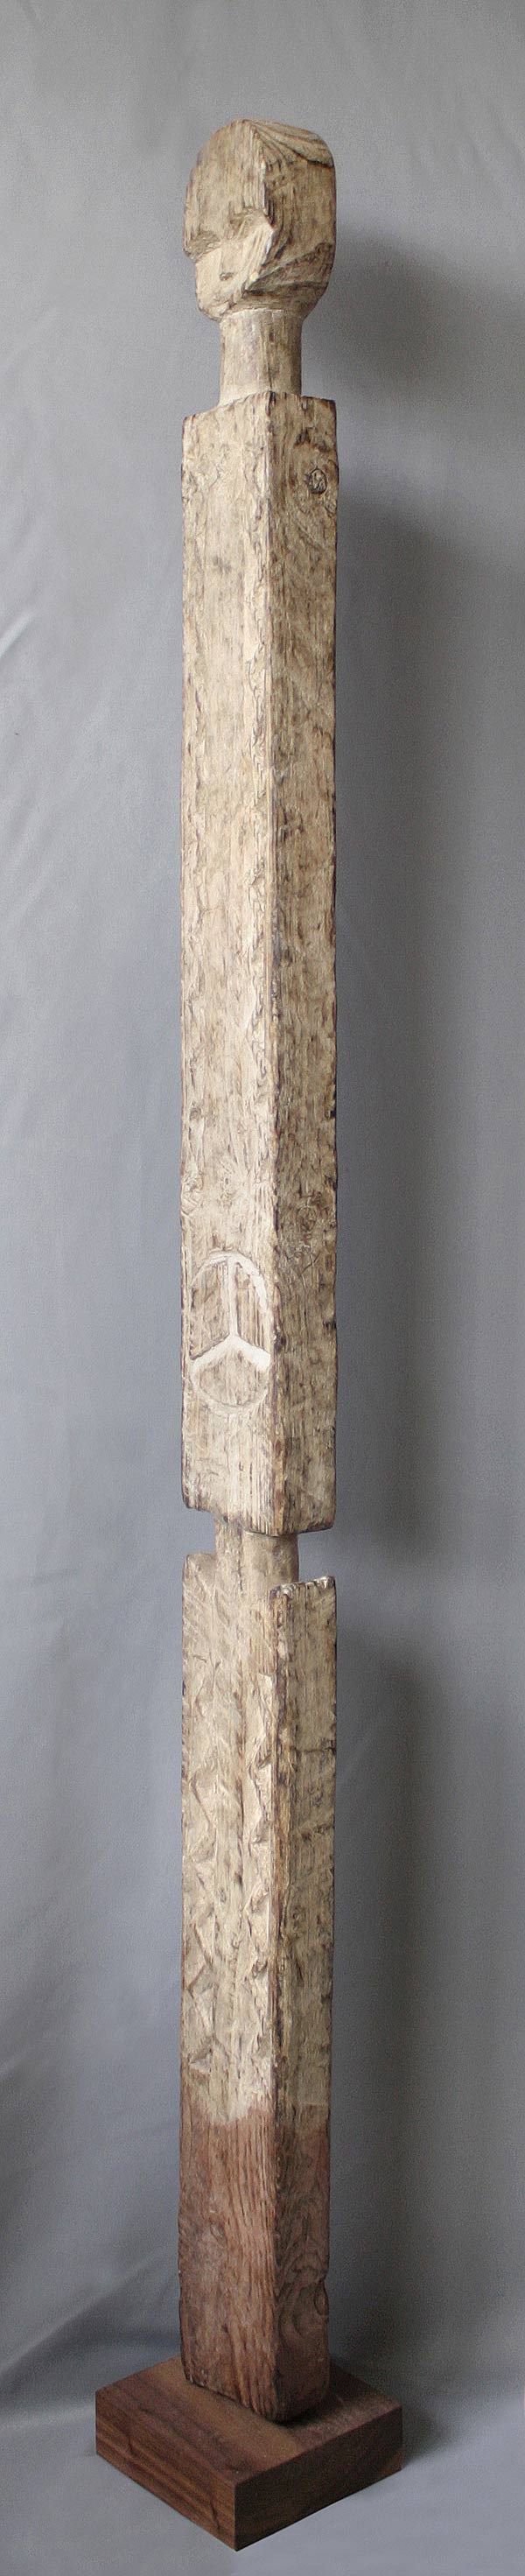 Giryama Pfostenfigur Stele Kenia A